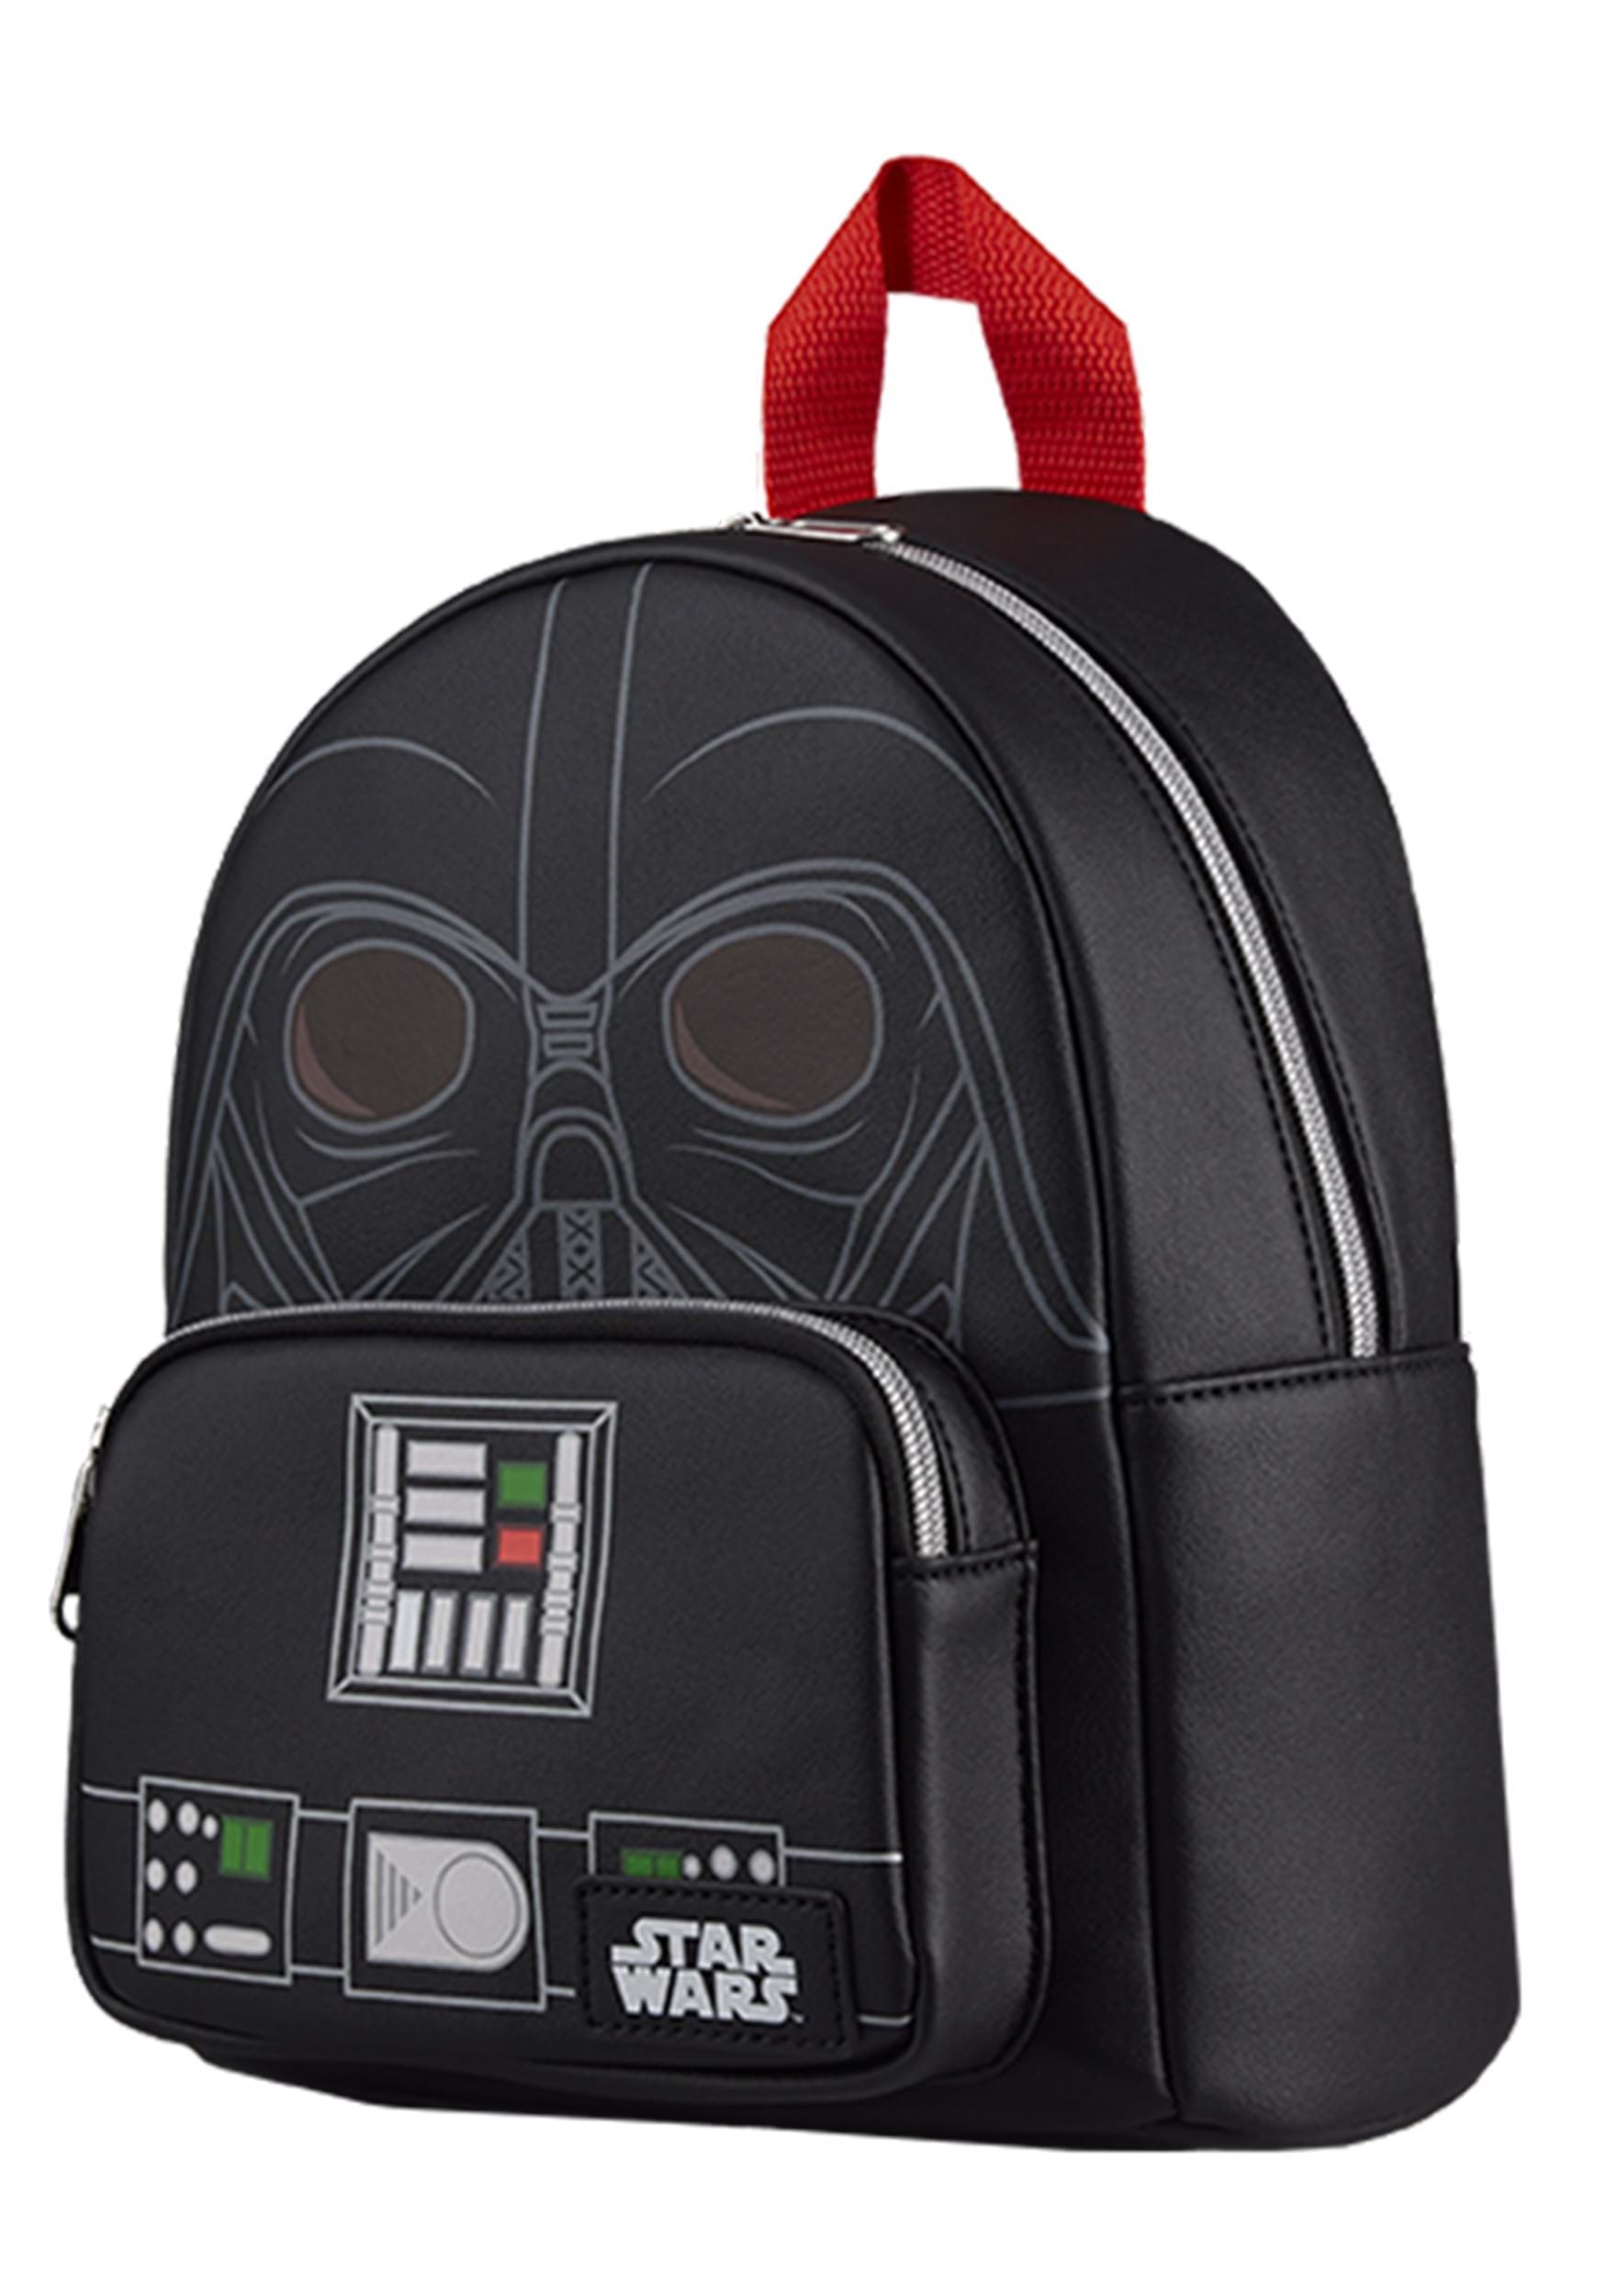 Funko POP! Star Wars Darth Vader Mini Backpack